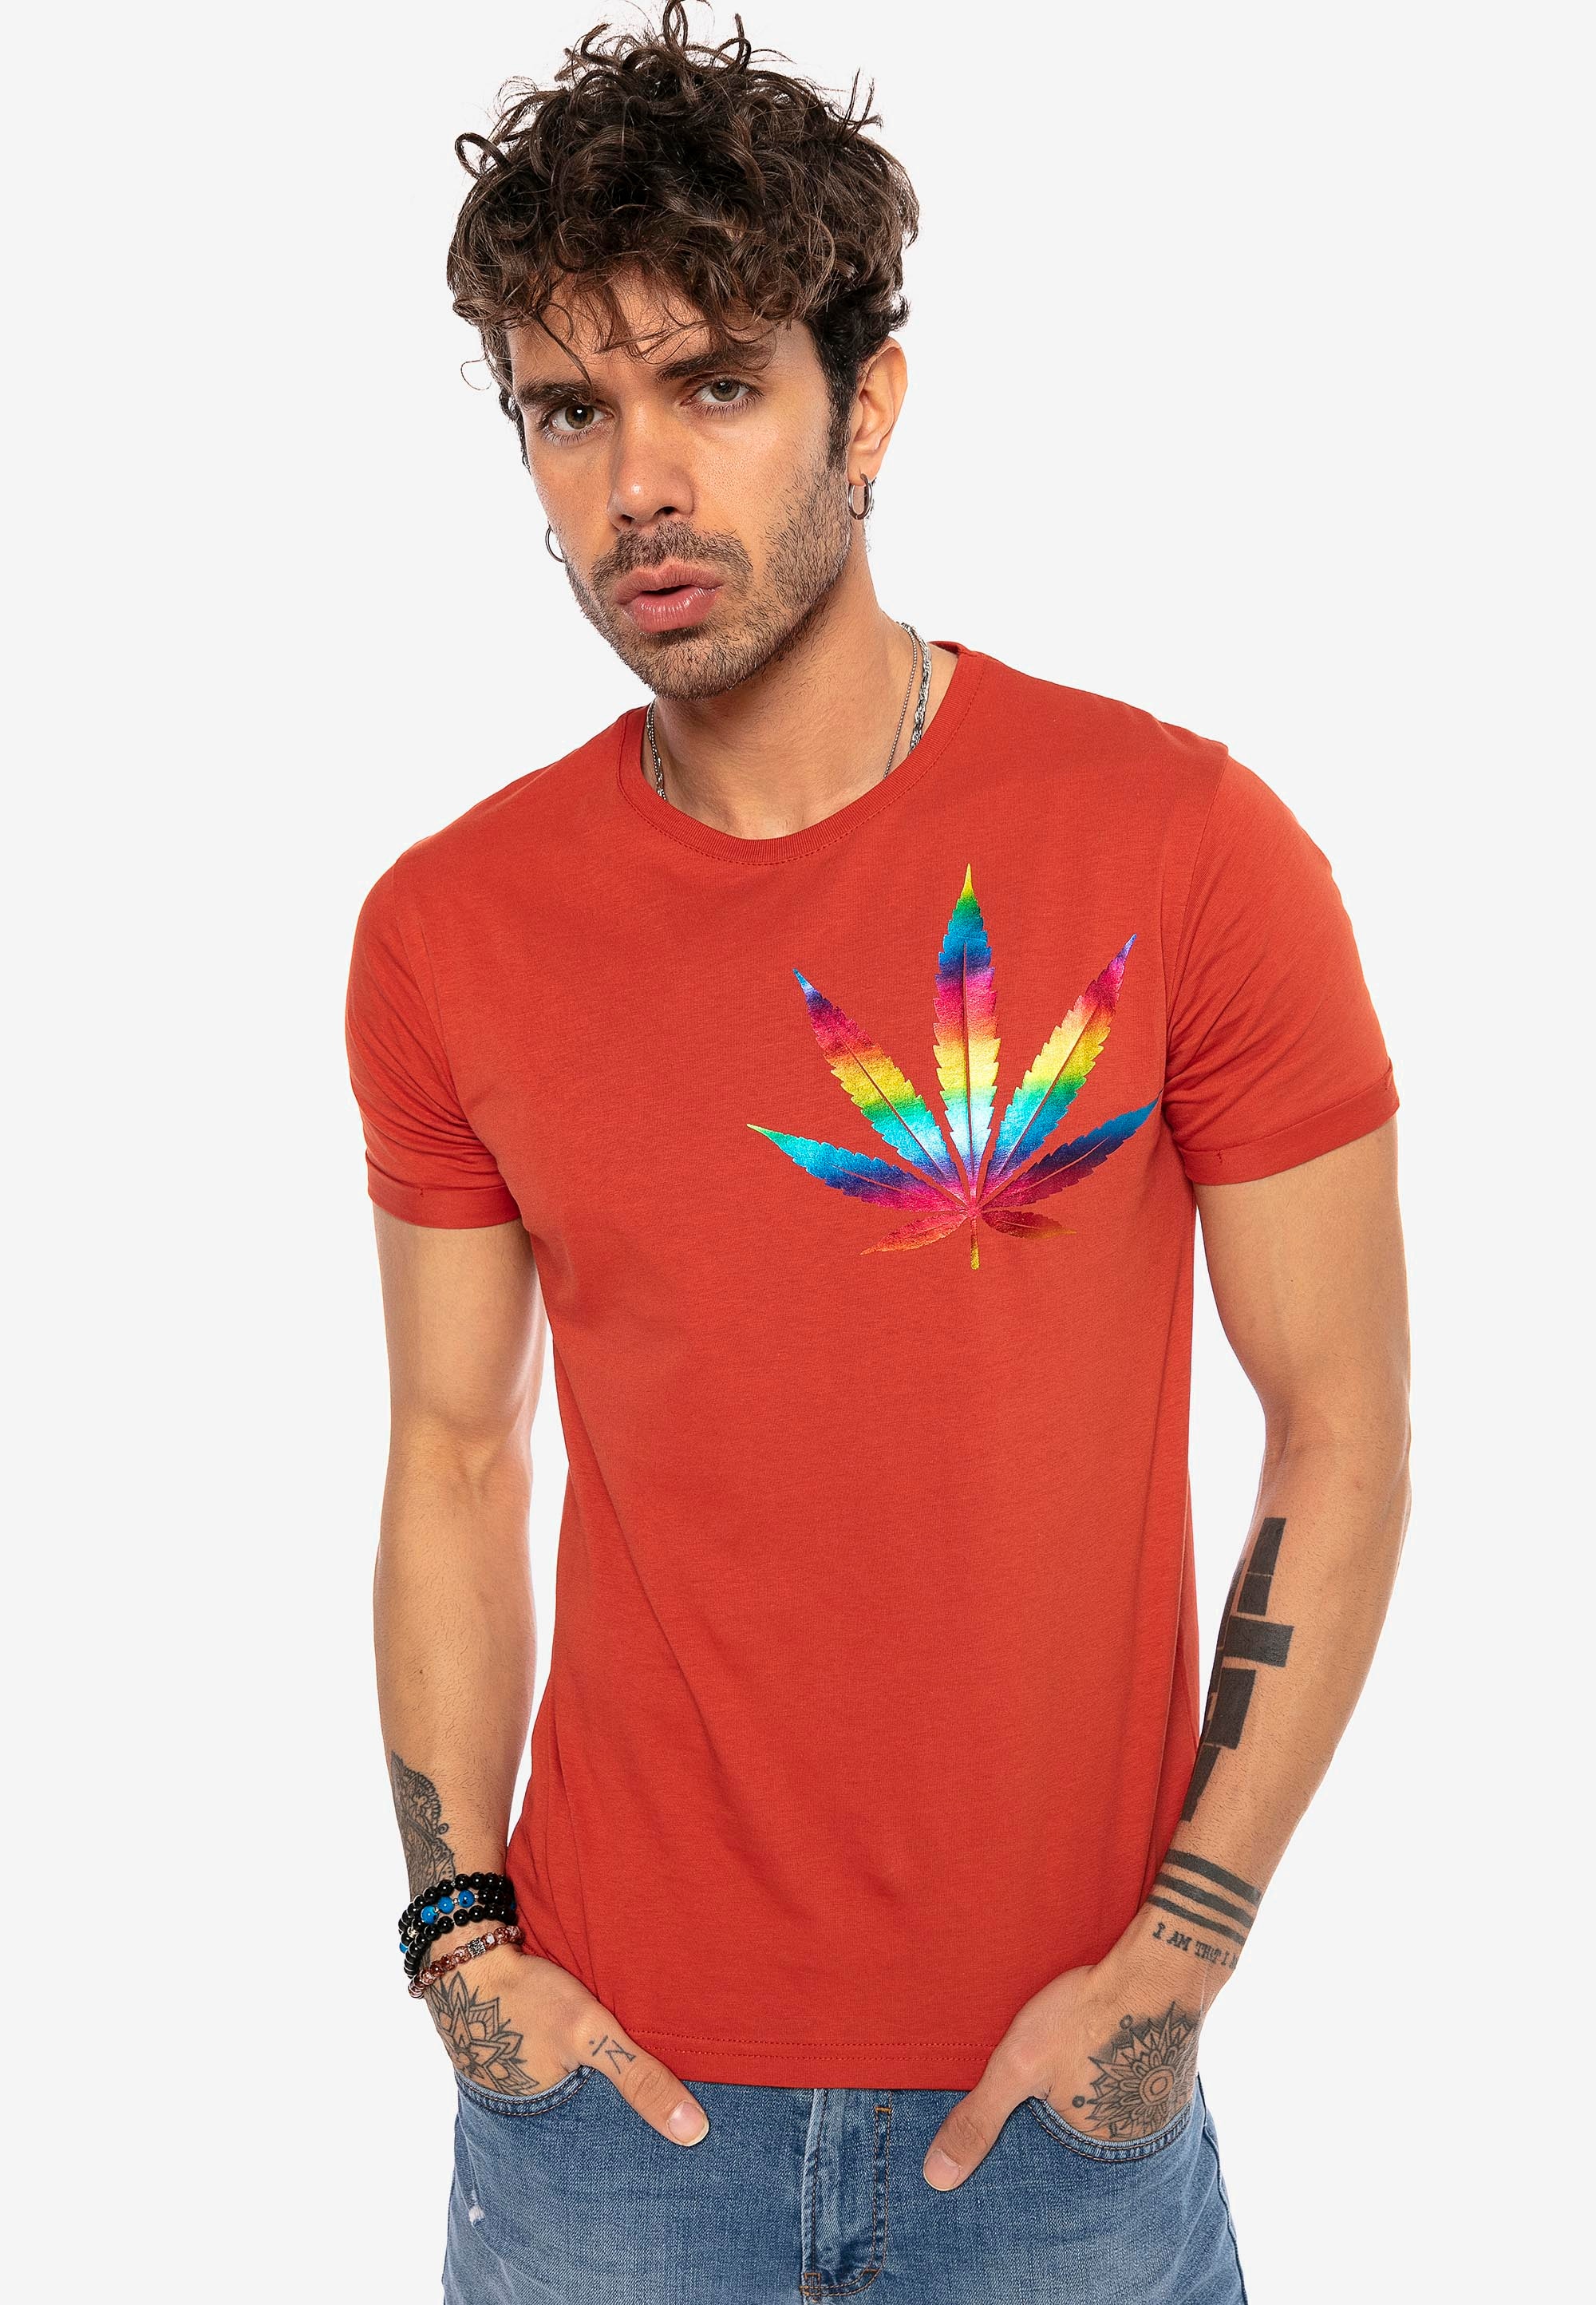 T-Shirt »legalize it«, mit Hanfblatt im Regenbogen-Design